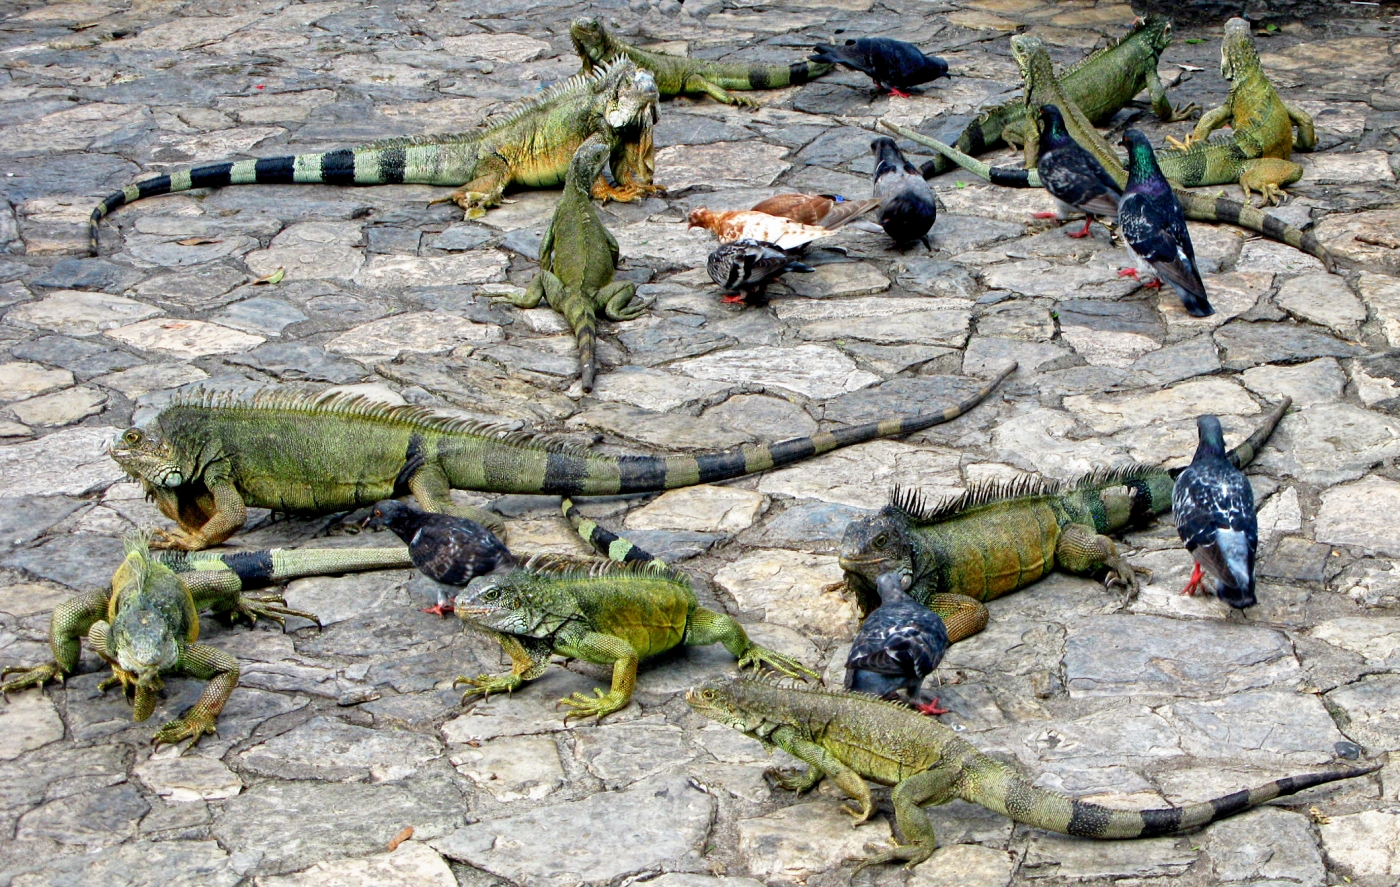 Feeding Pidgeons And Iguanas In Guayaquil, Ecuador by Louis Arthur Norton